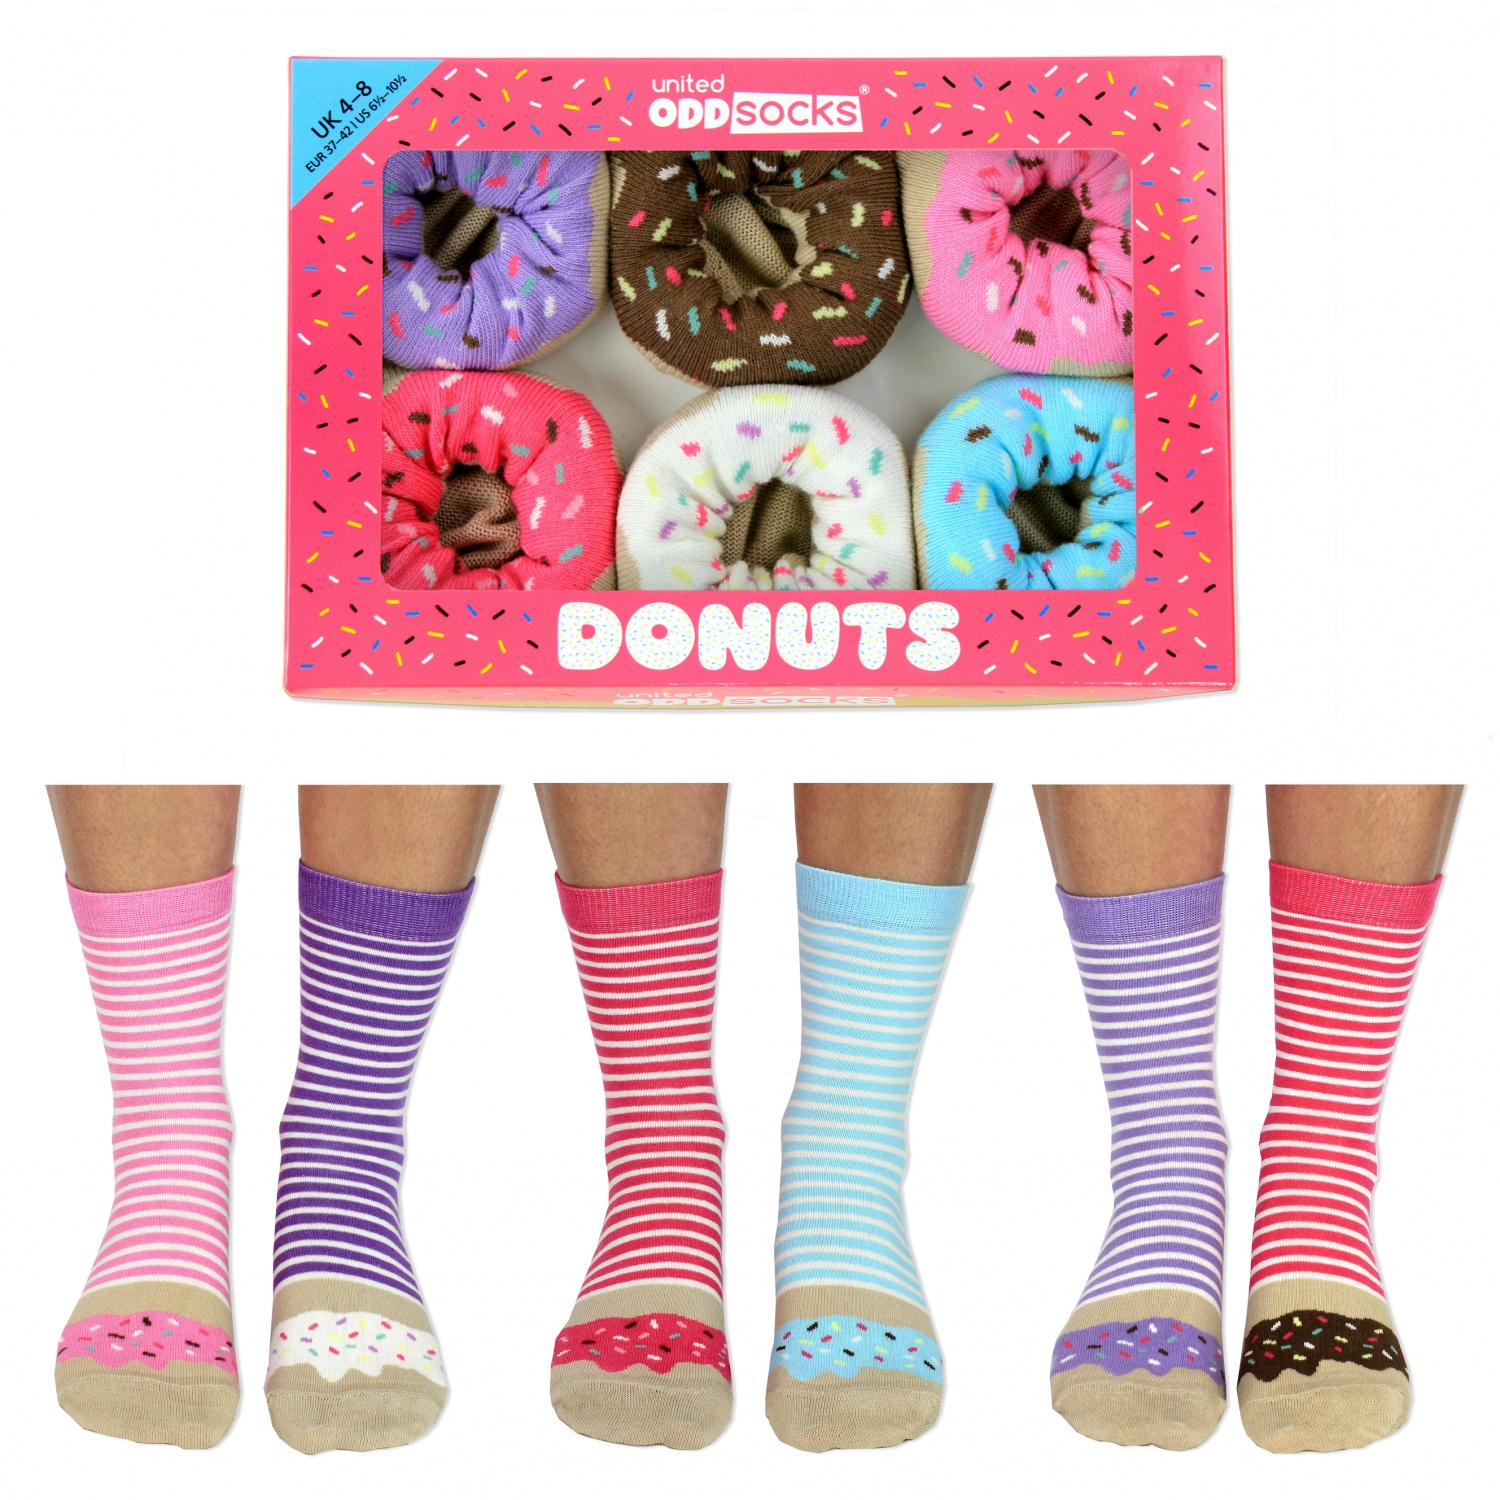 United Oddsocks Donuts Design - Ladies Novelty Socks